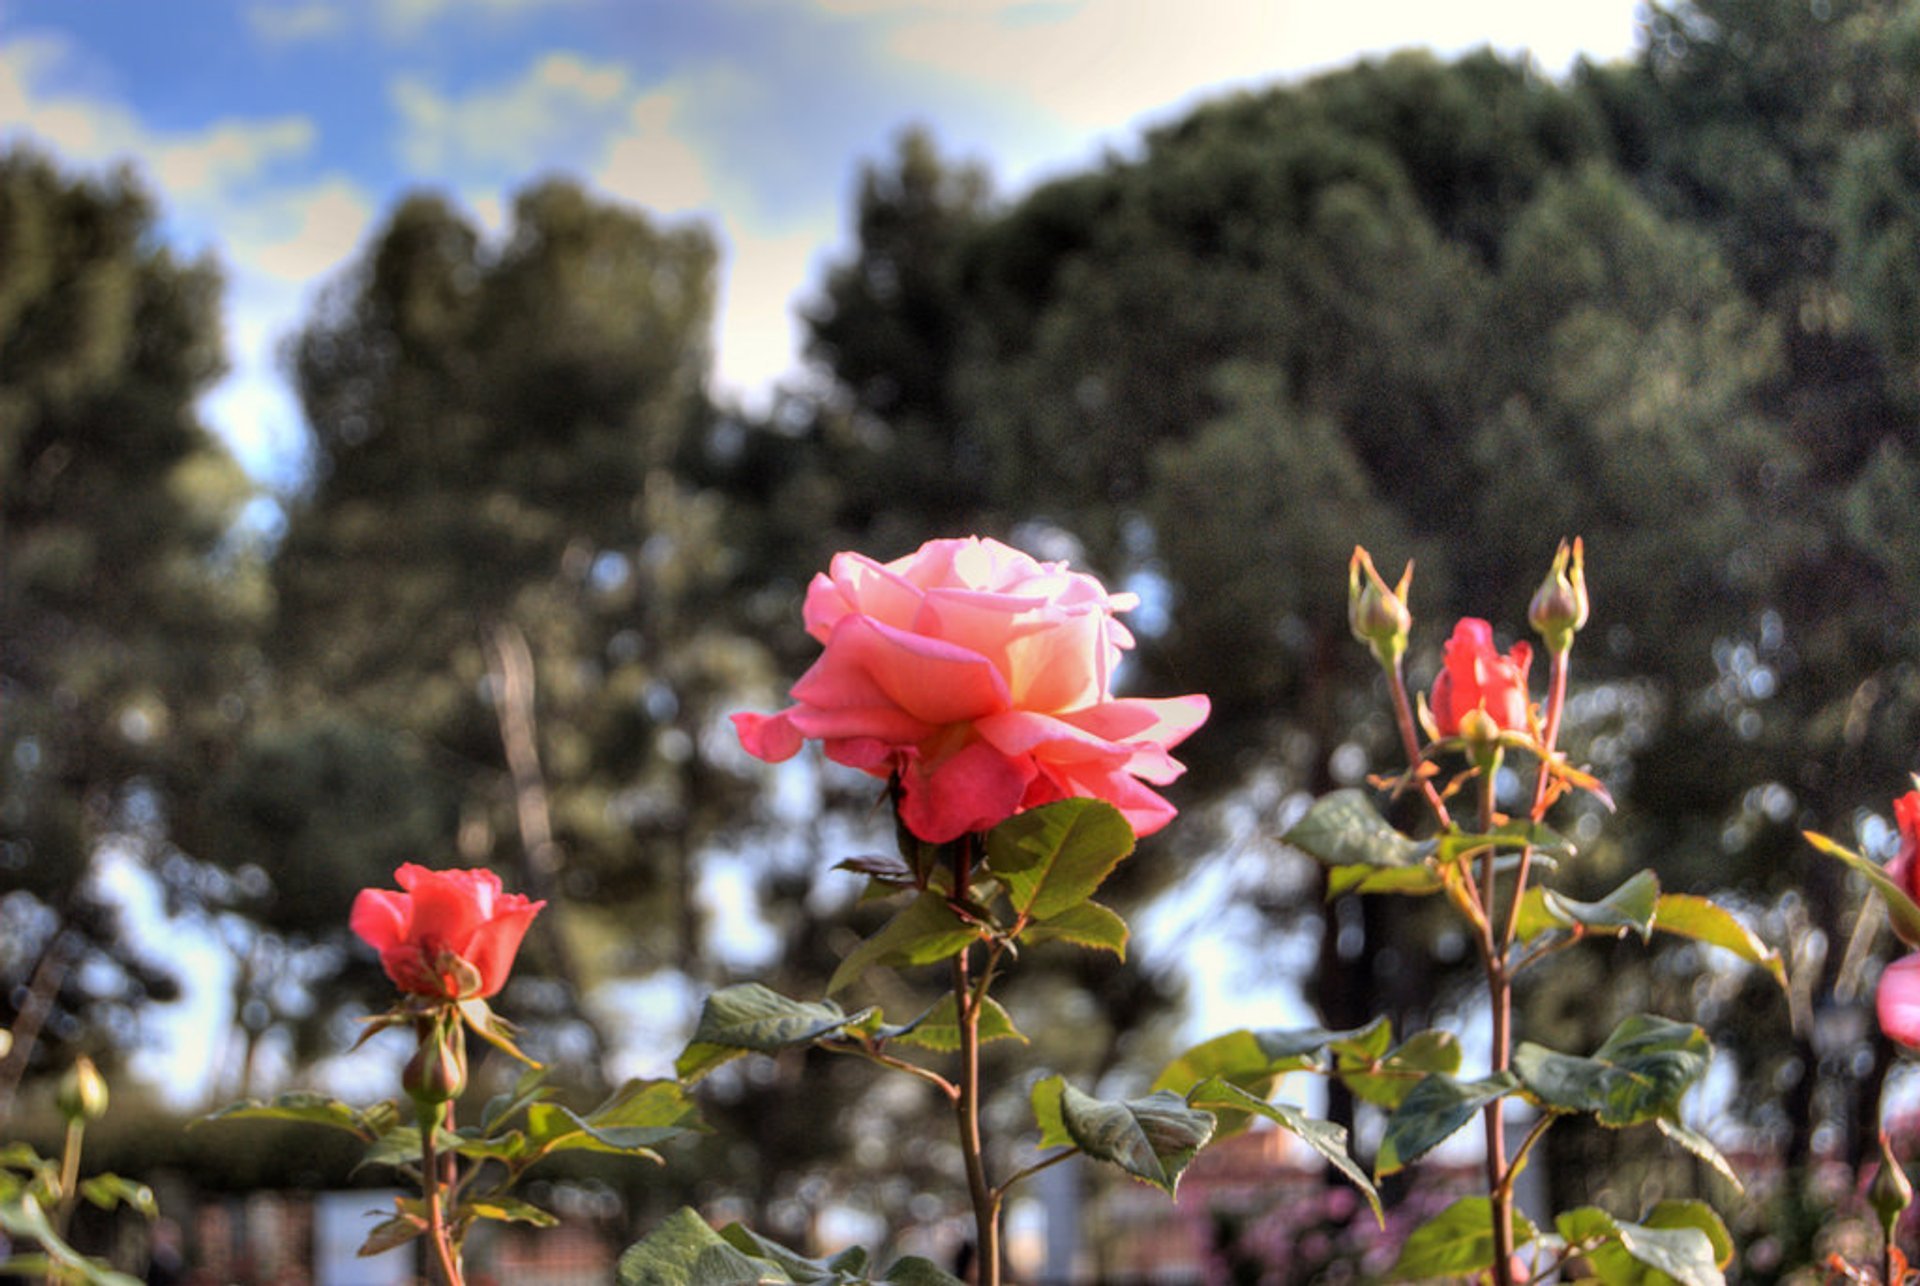 La Rosaleda (Rose Garden)